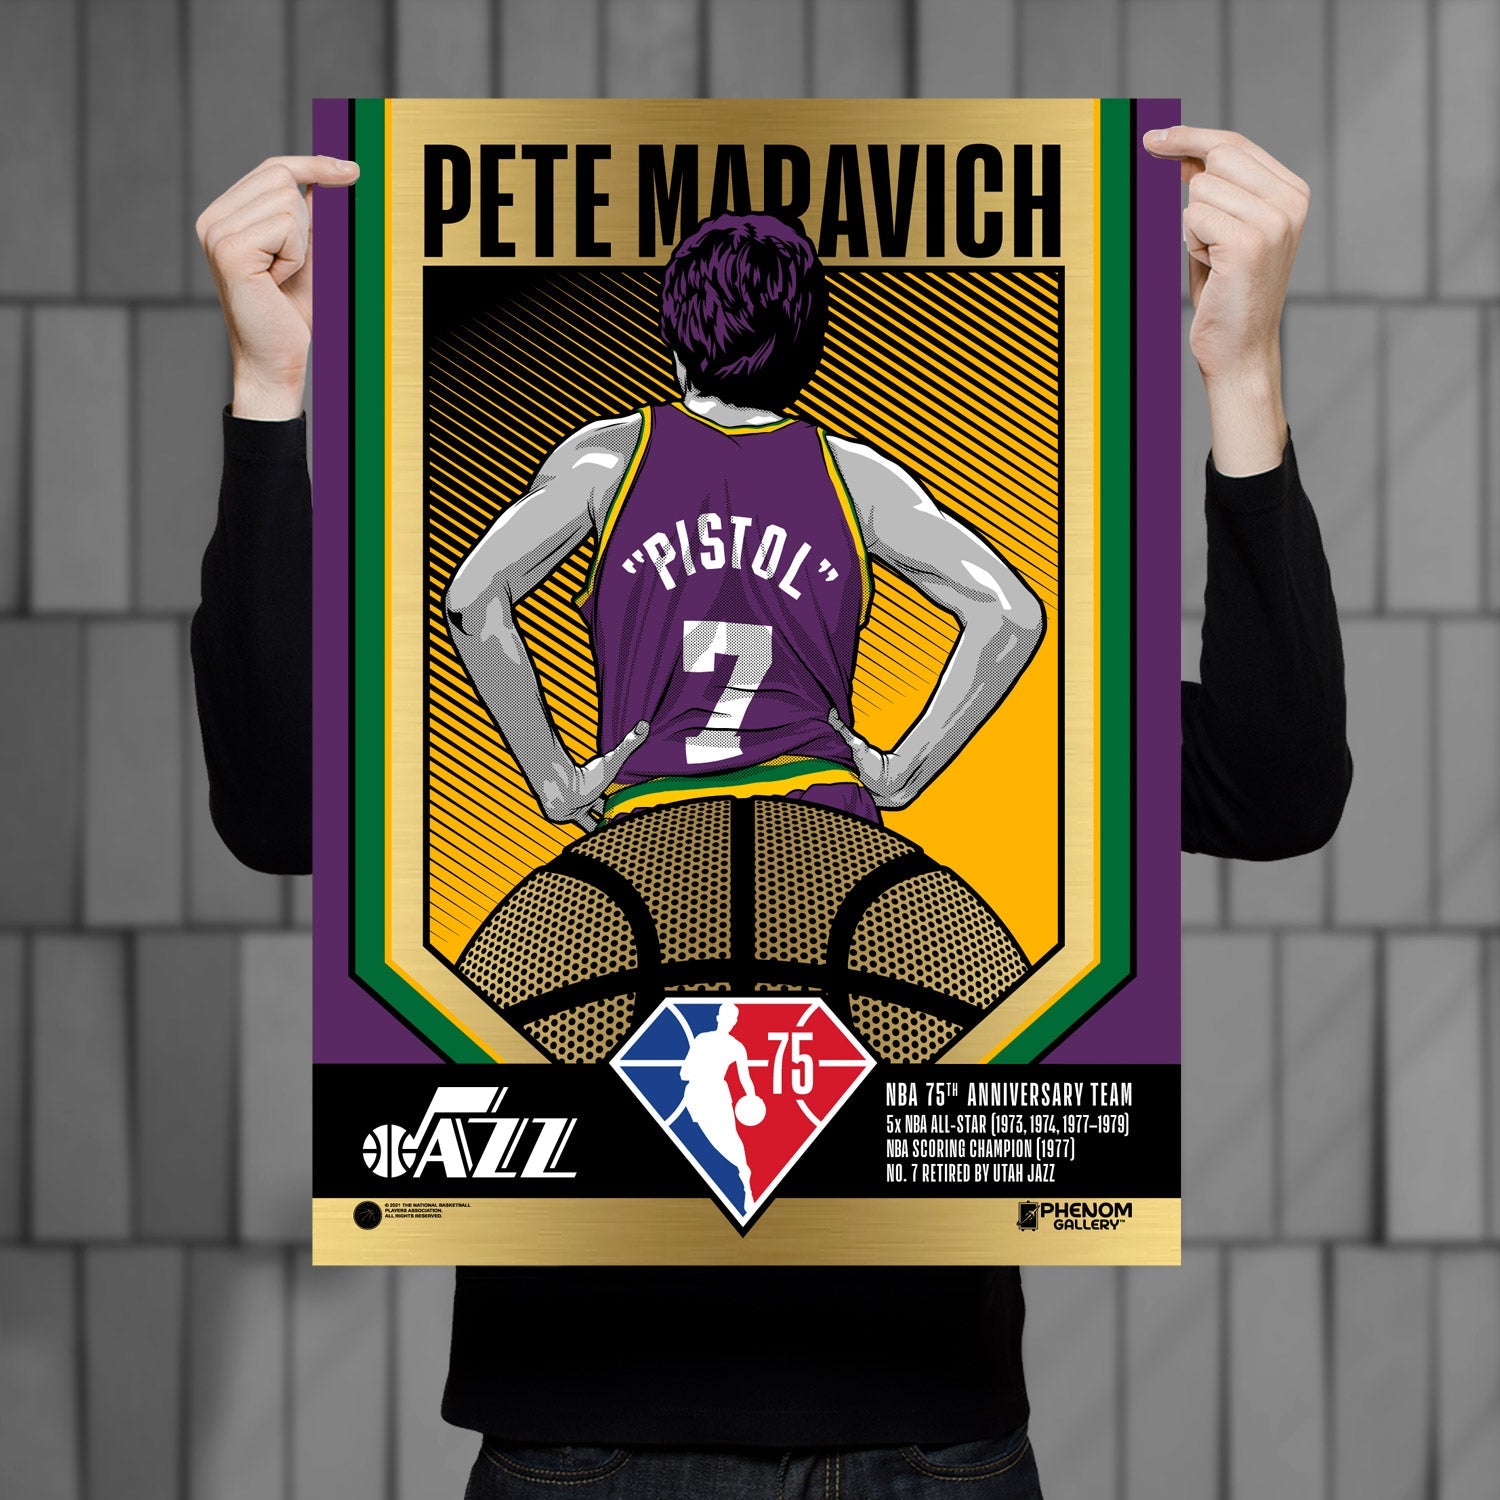 Gold: Pistol Pete Maravich's Basketball Genius - Duke Basketball  Report